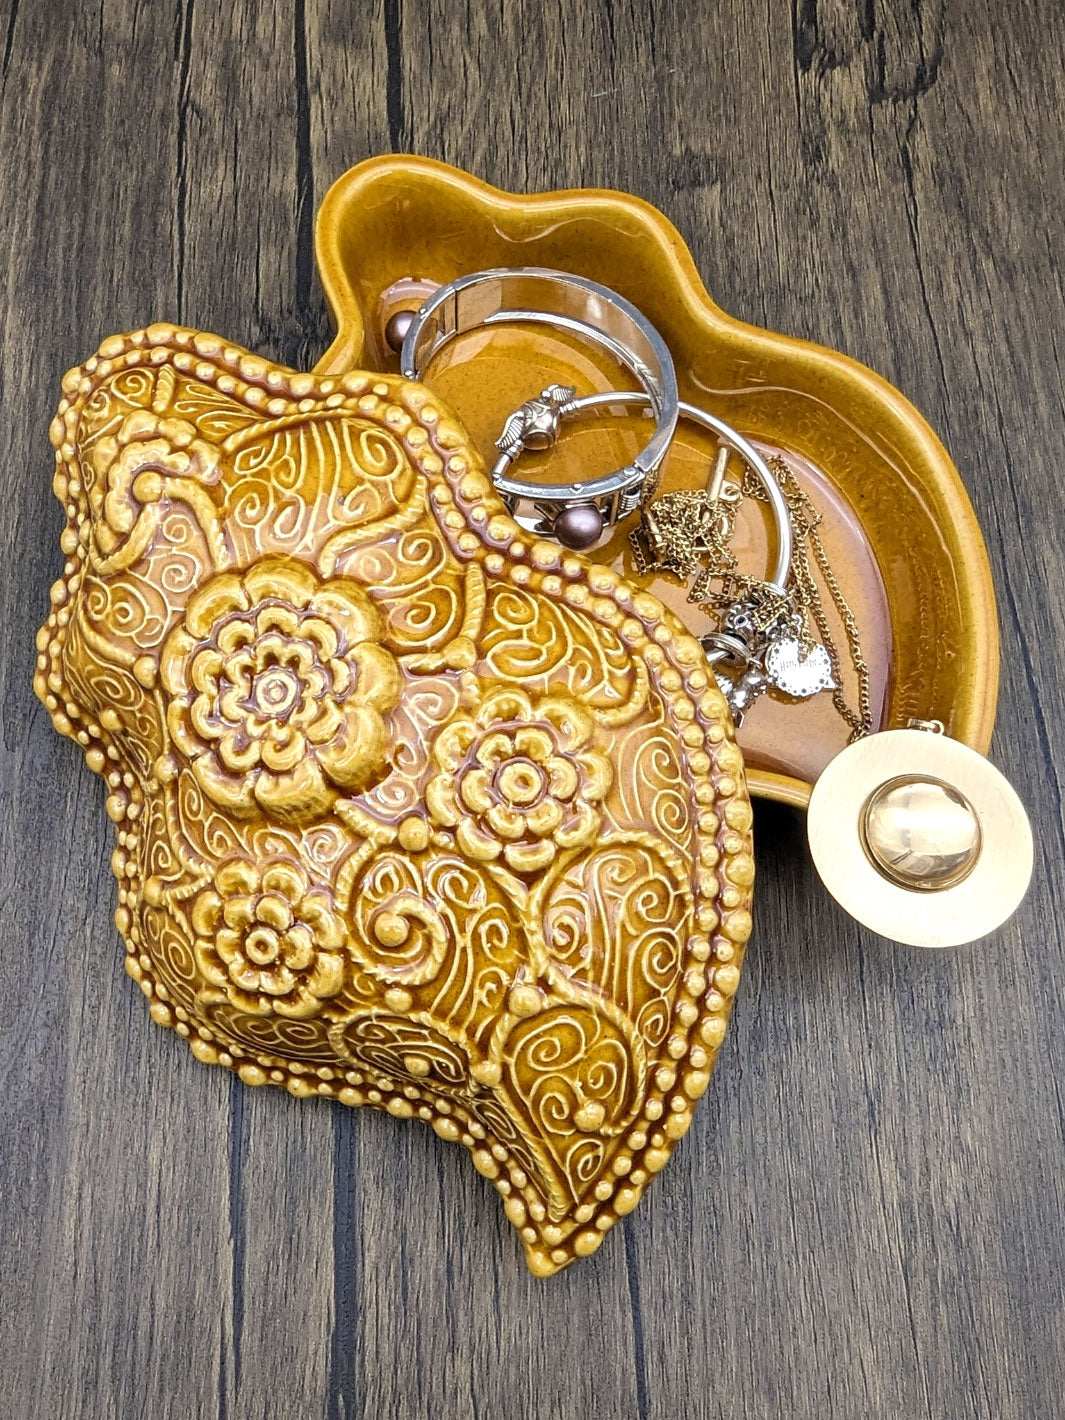 Viana’s Heart Decorative Jewelry Box